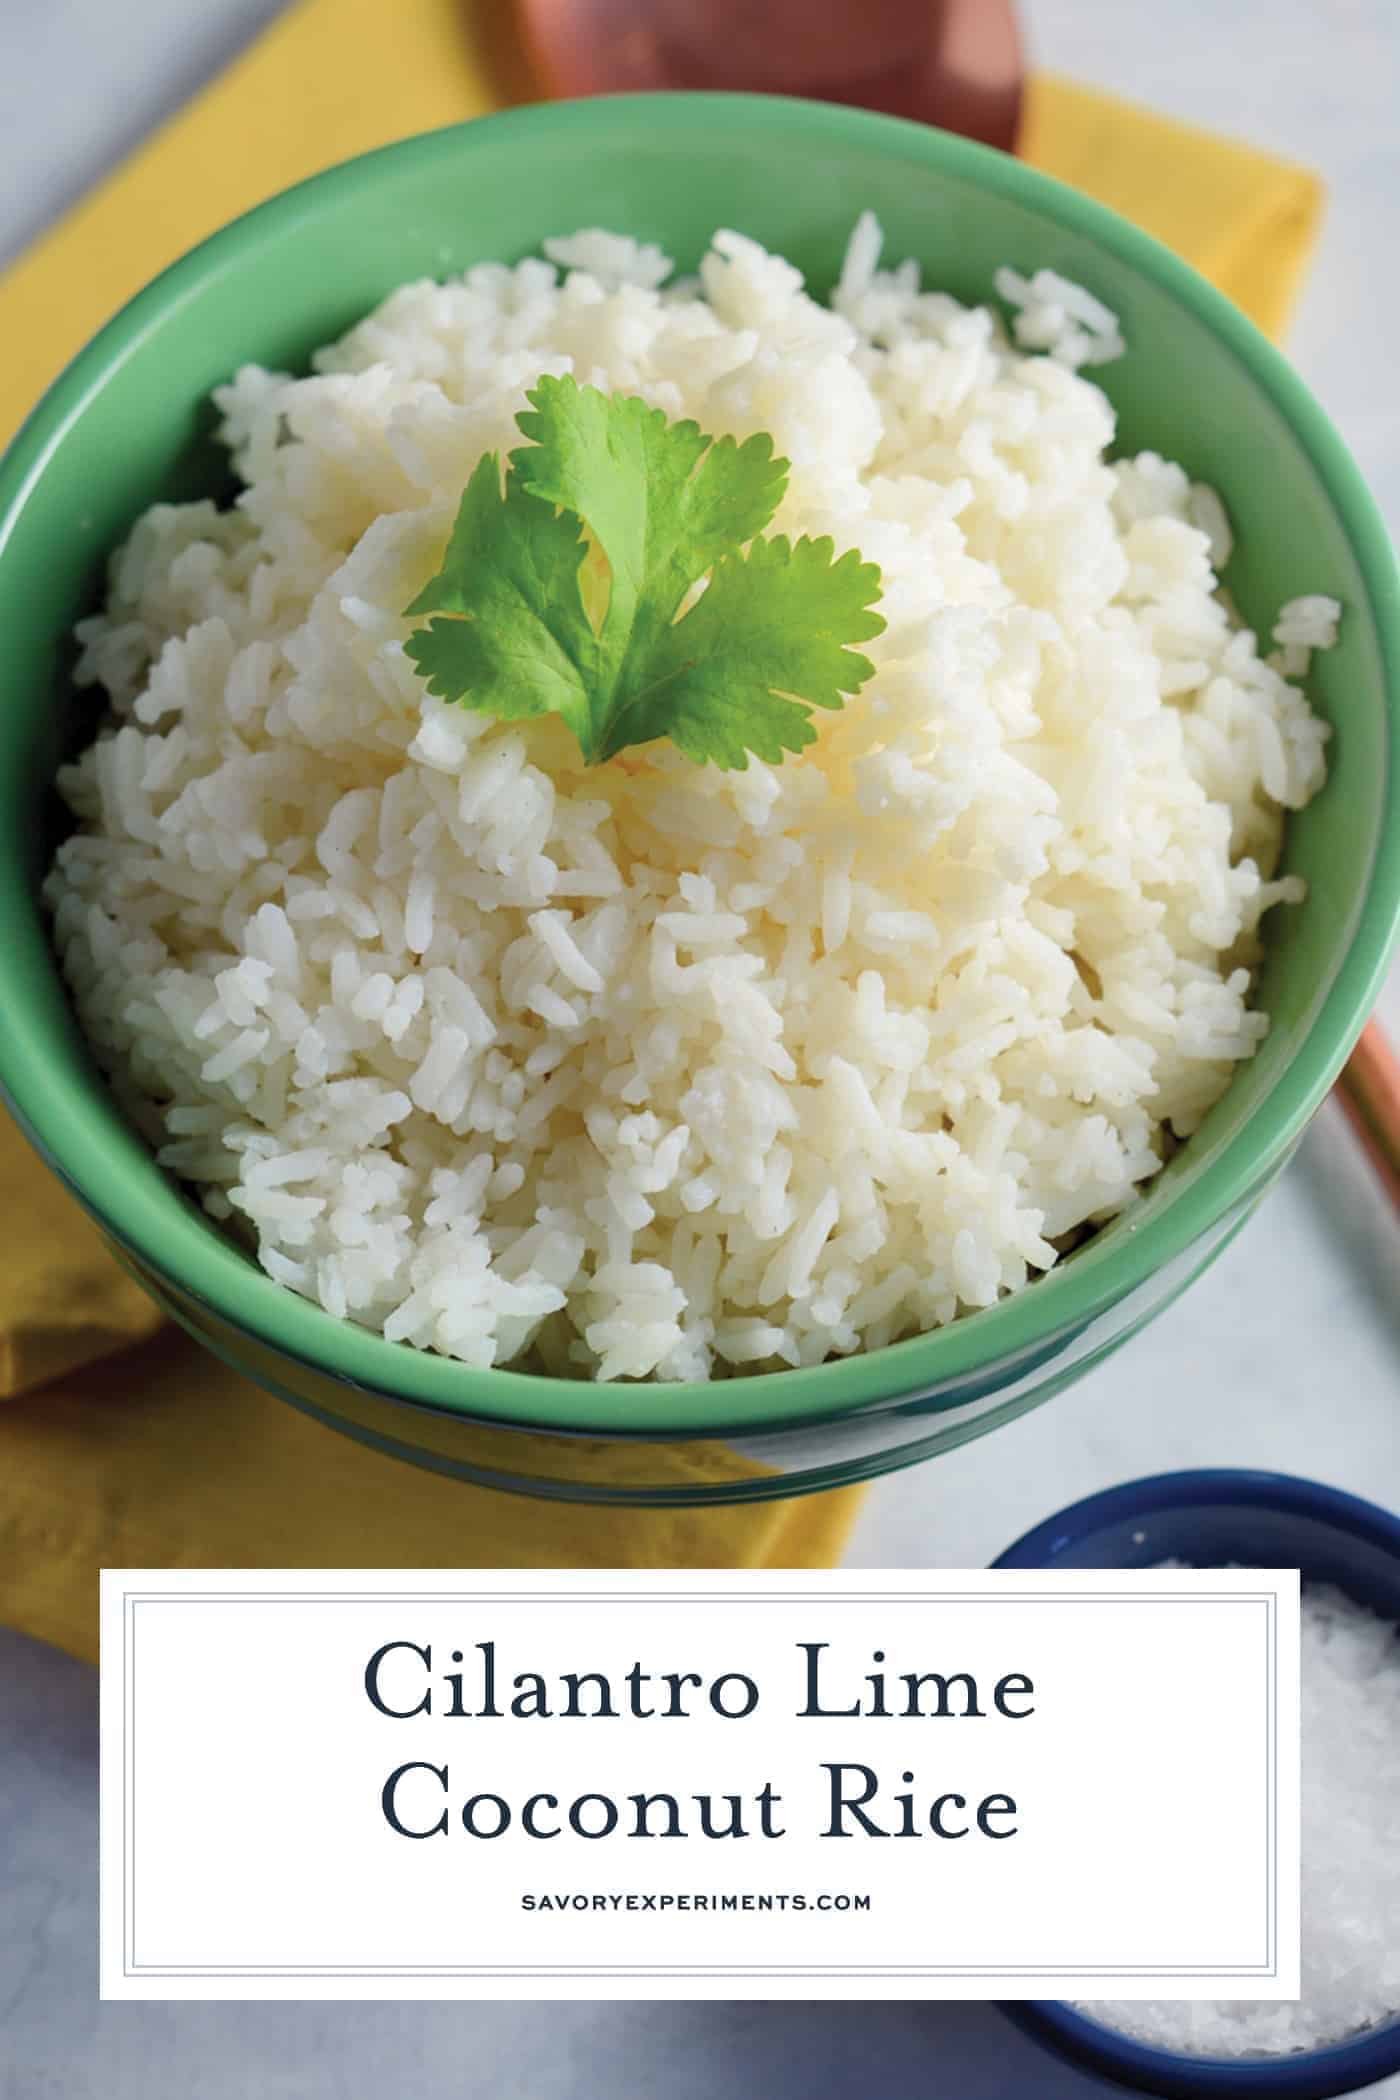 Cilantro Lime Coconut Rice - Tasty Sticky Rice Recipe